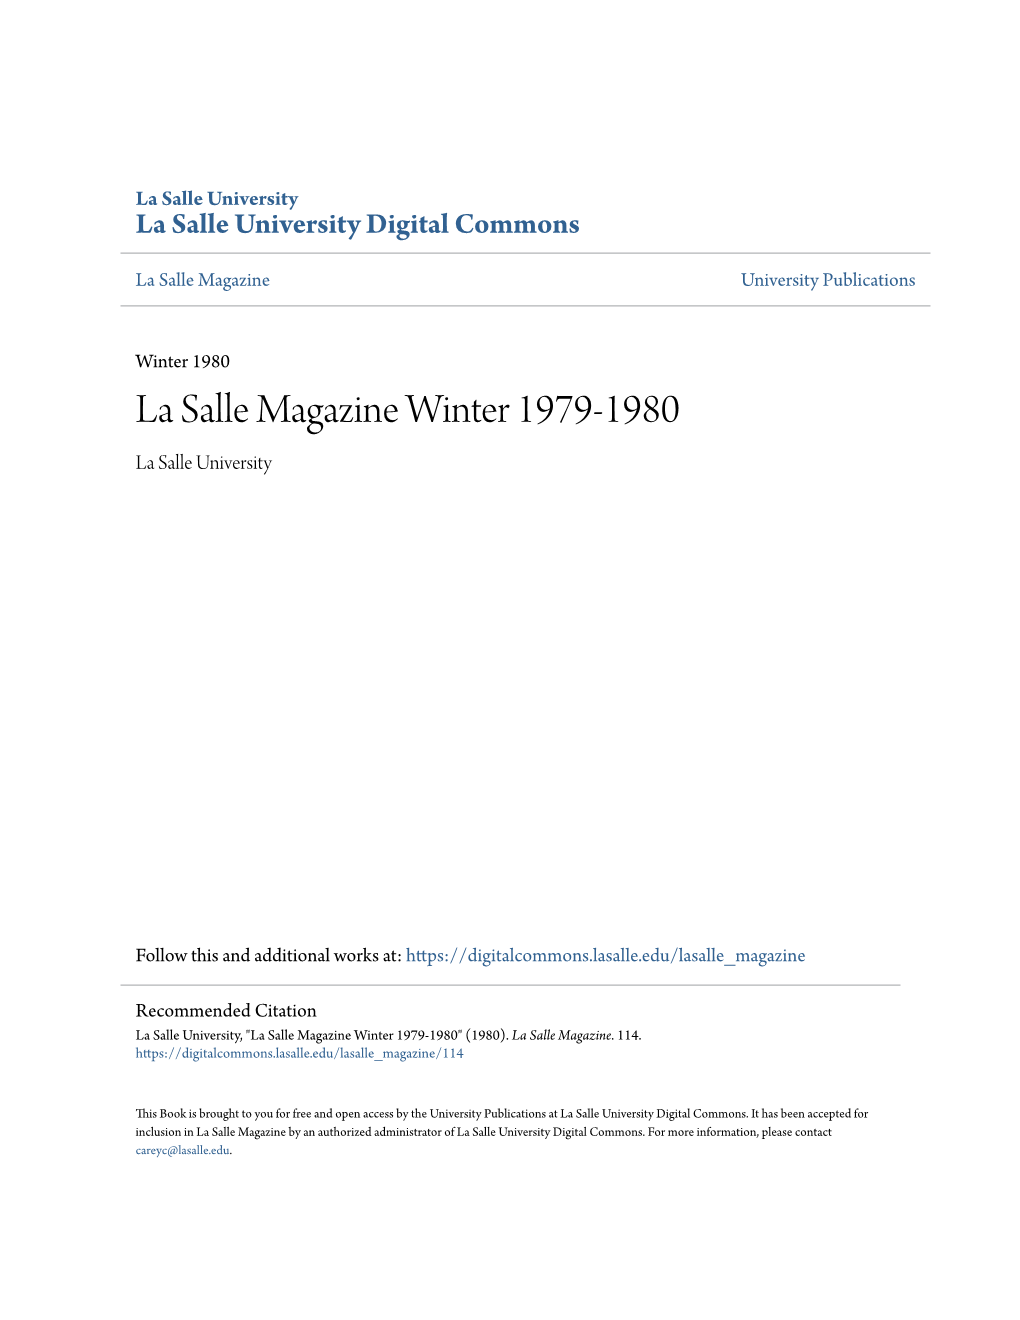 La Salle Magazine Winter 1979-1980 La Salle University